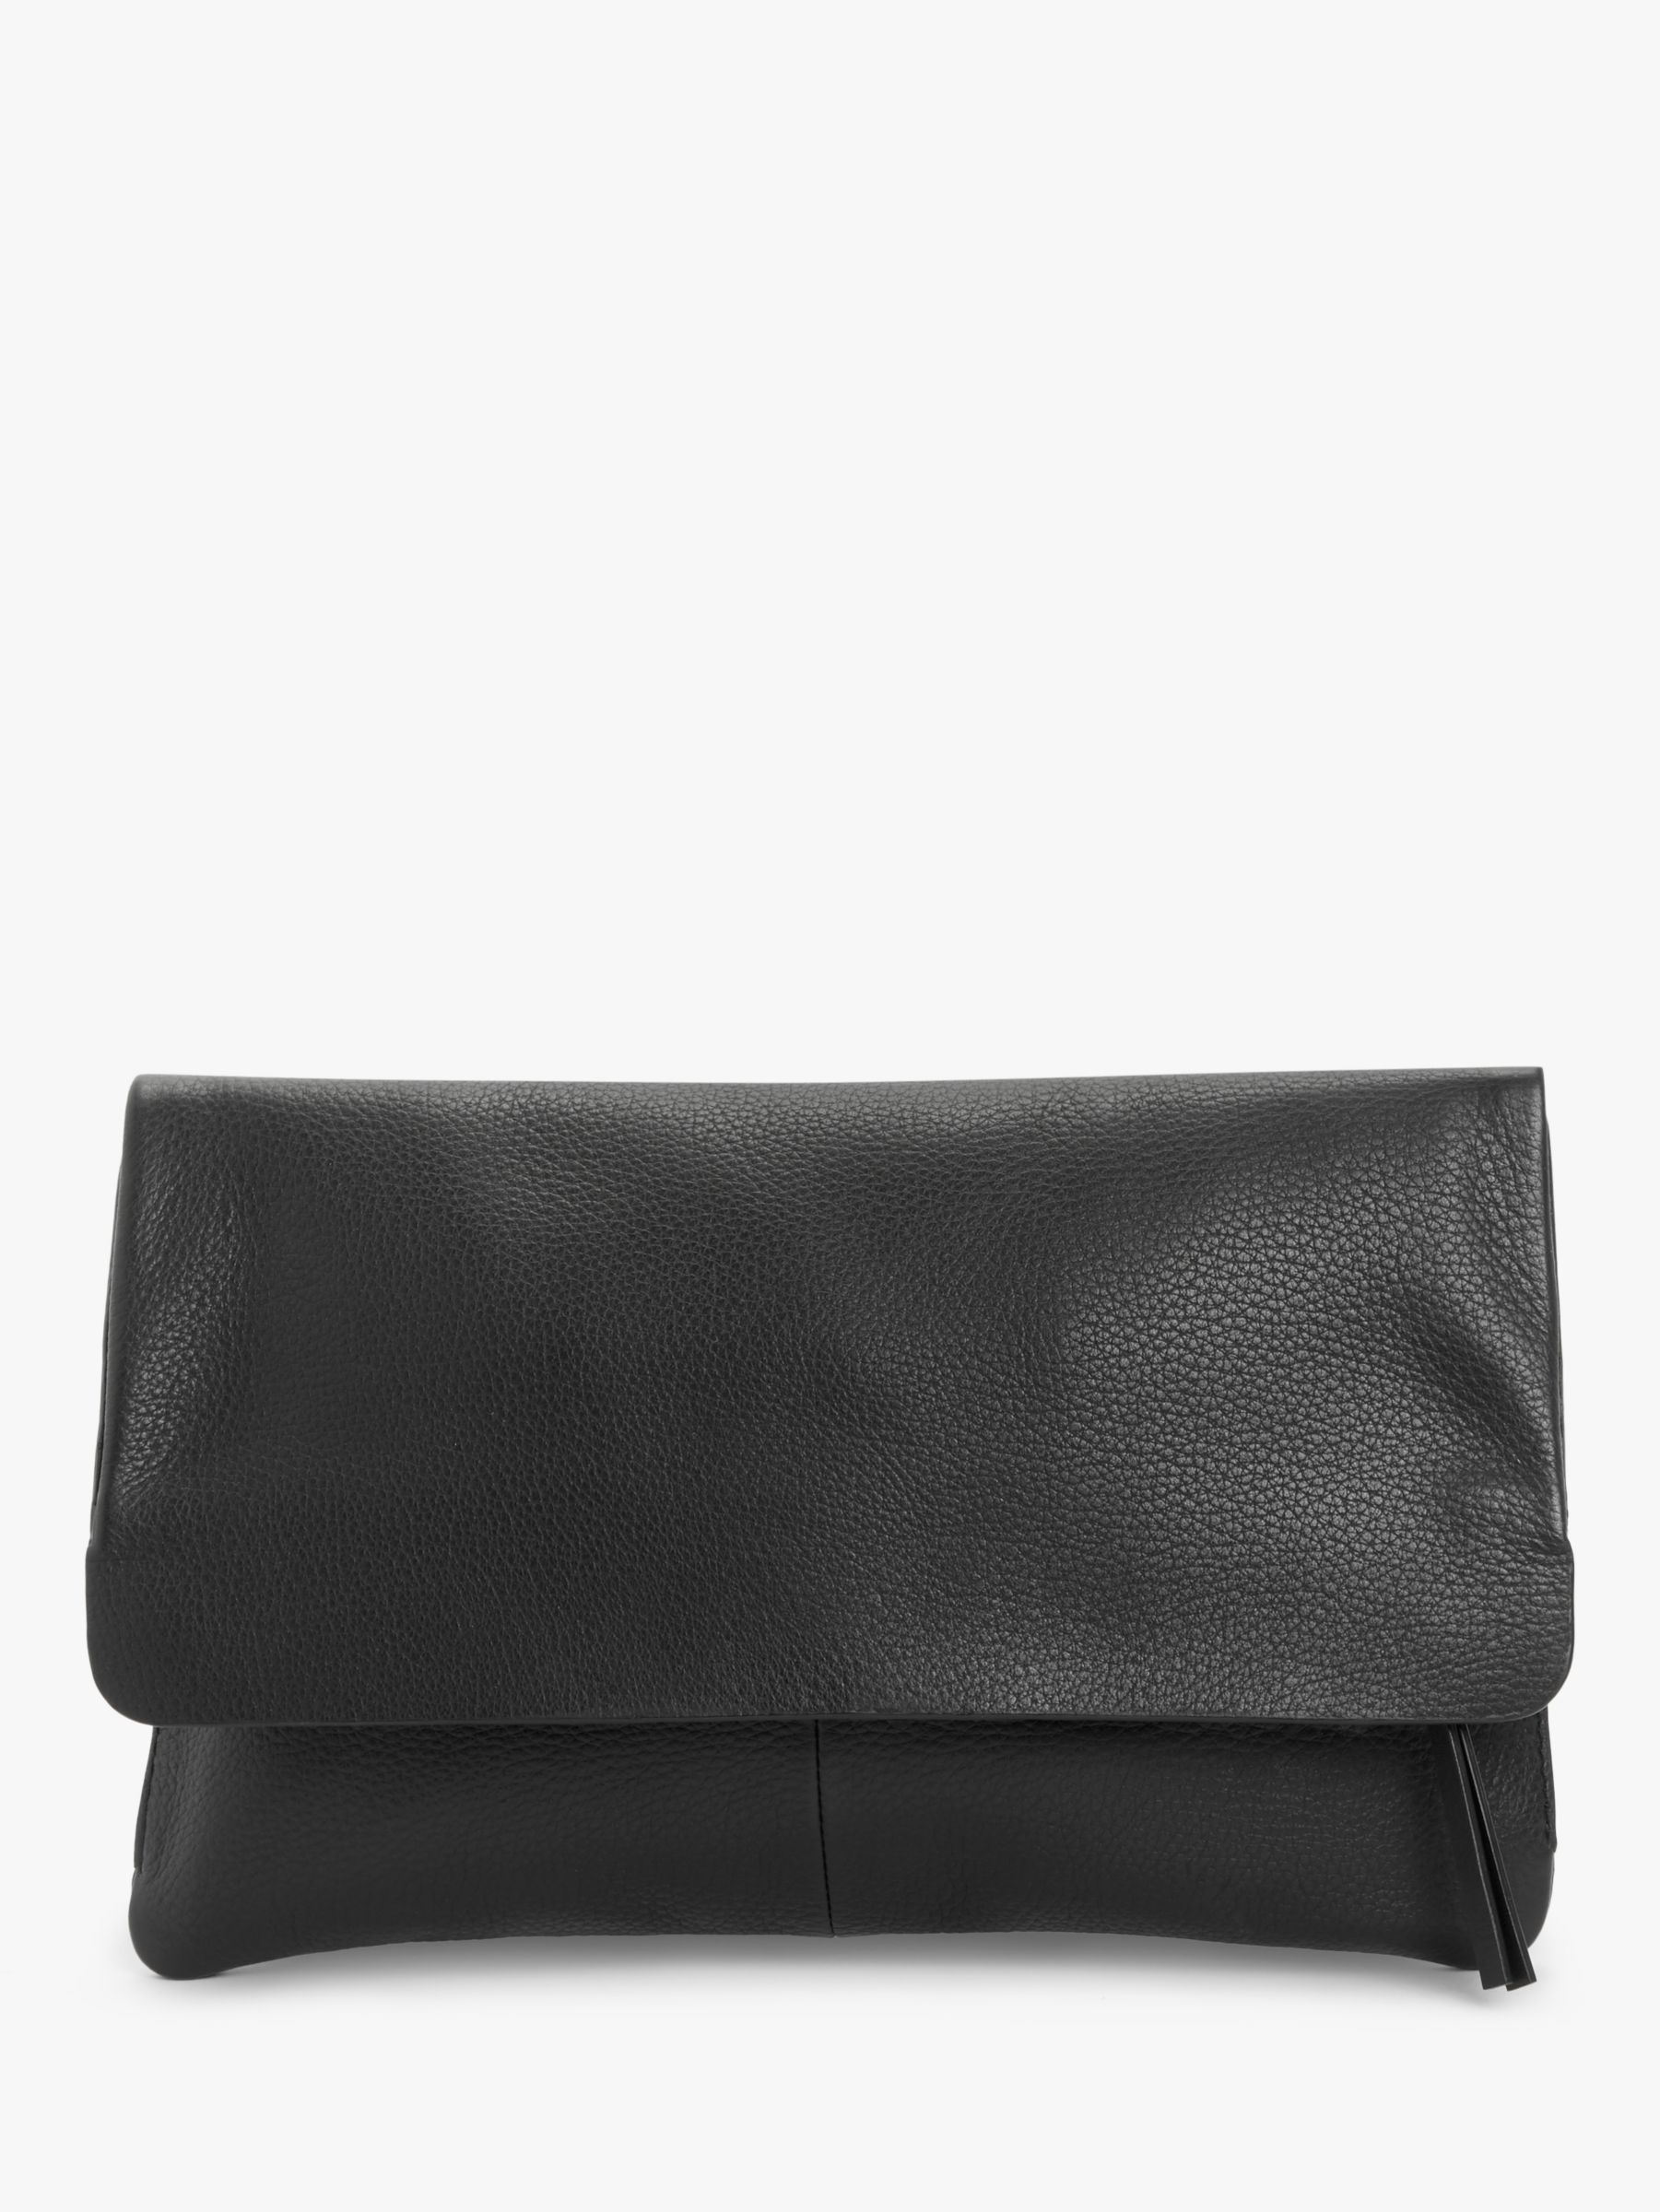 plain black clutch bag